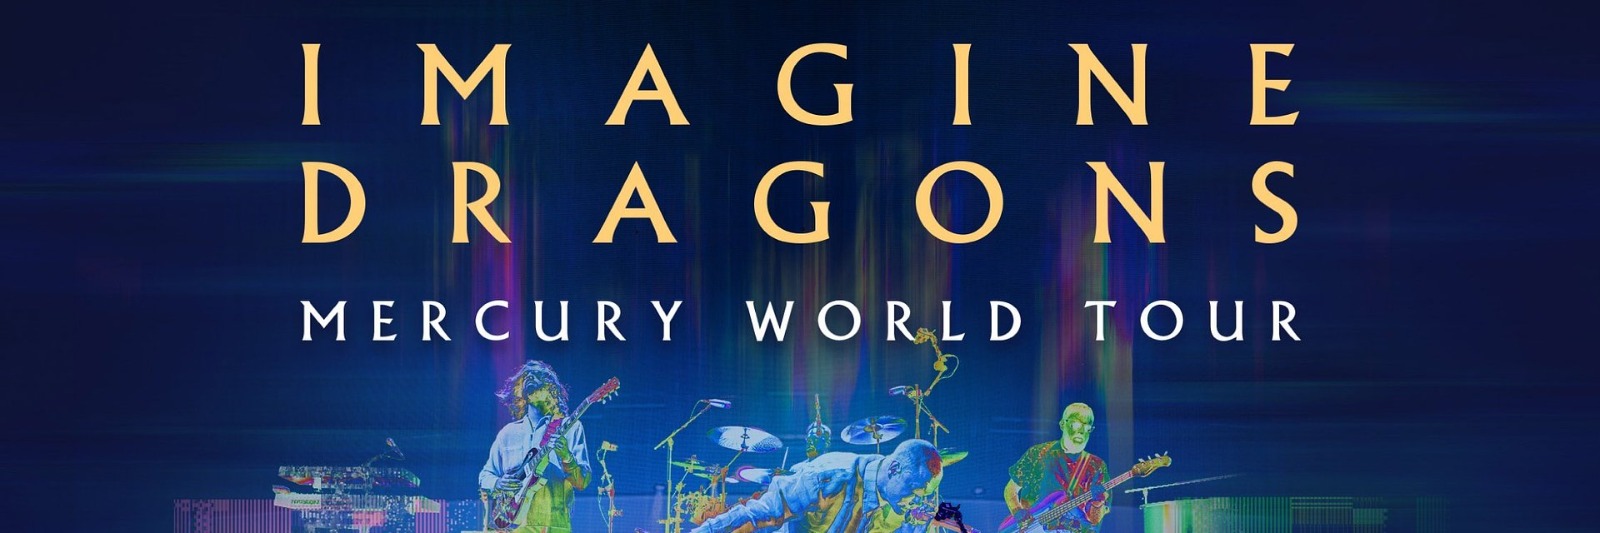 Imagine Dragons llevará su "Mercury World Tour" a Monterrey en mayo 2023 1